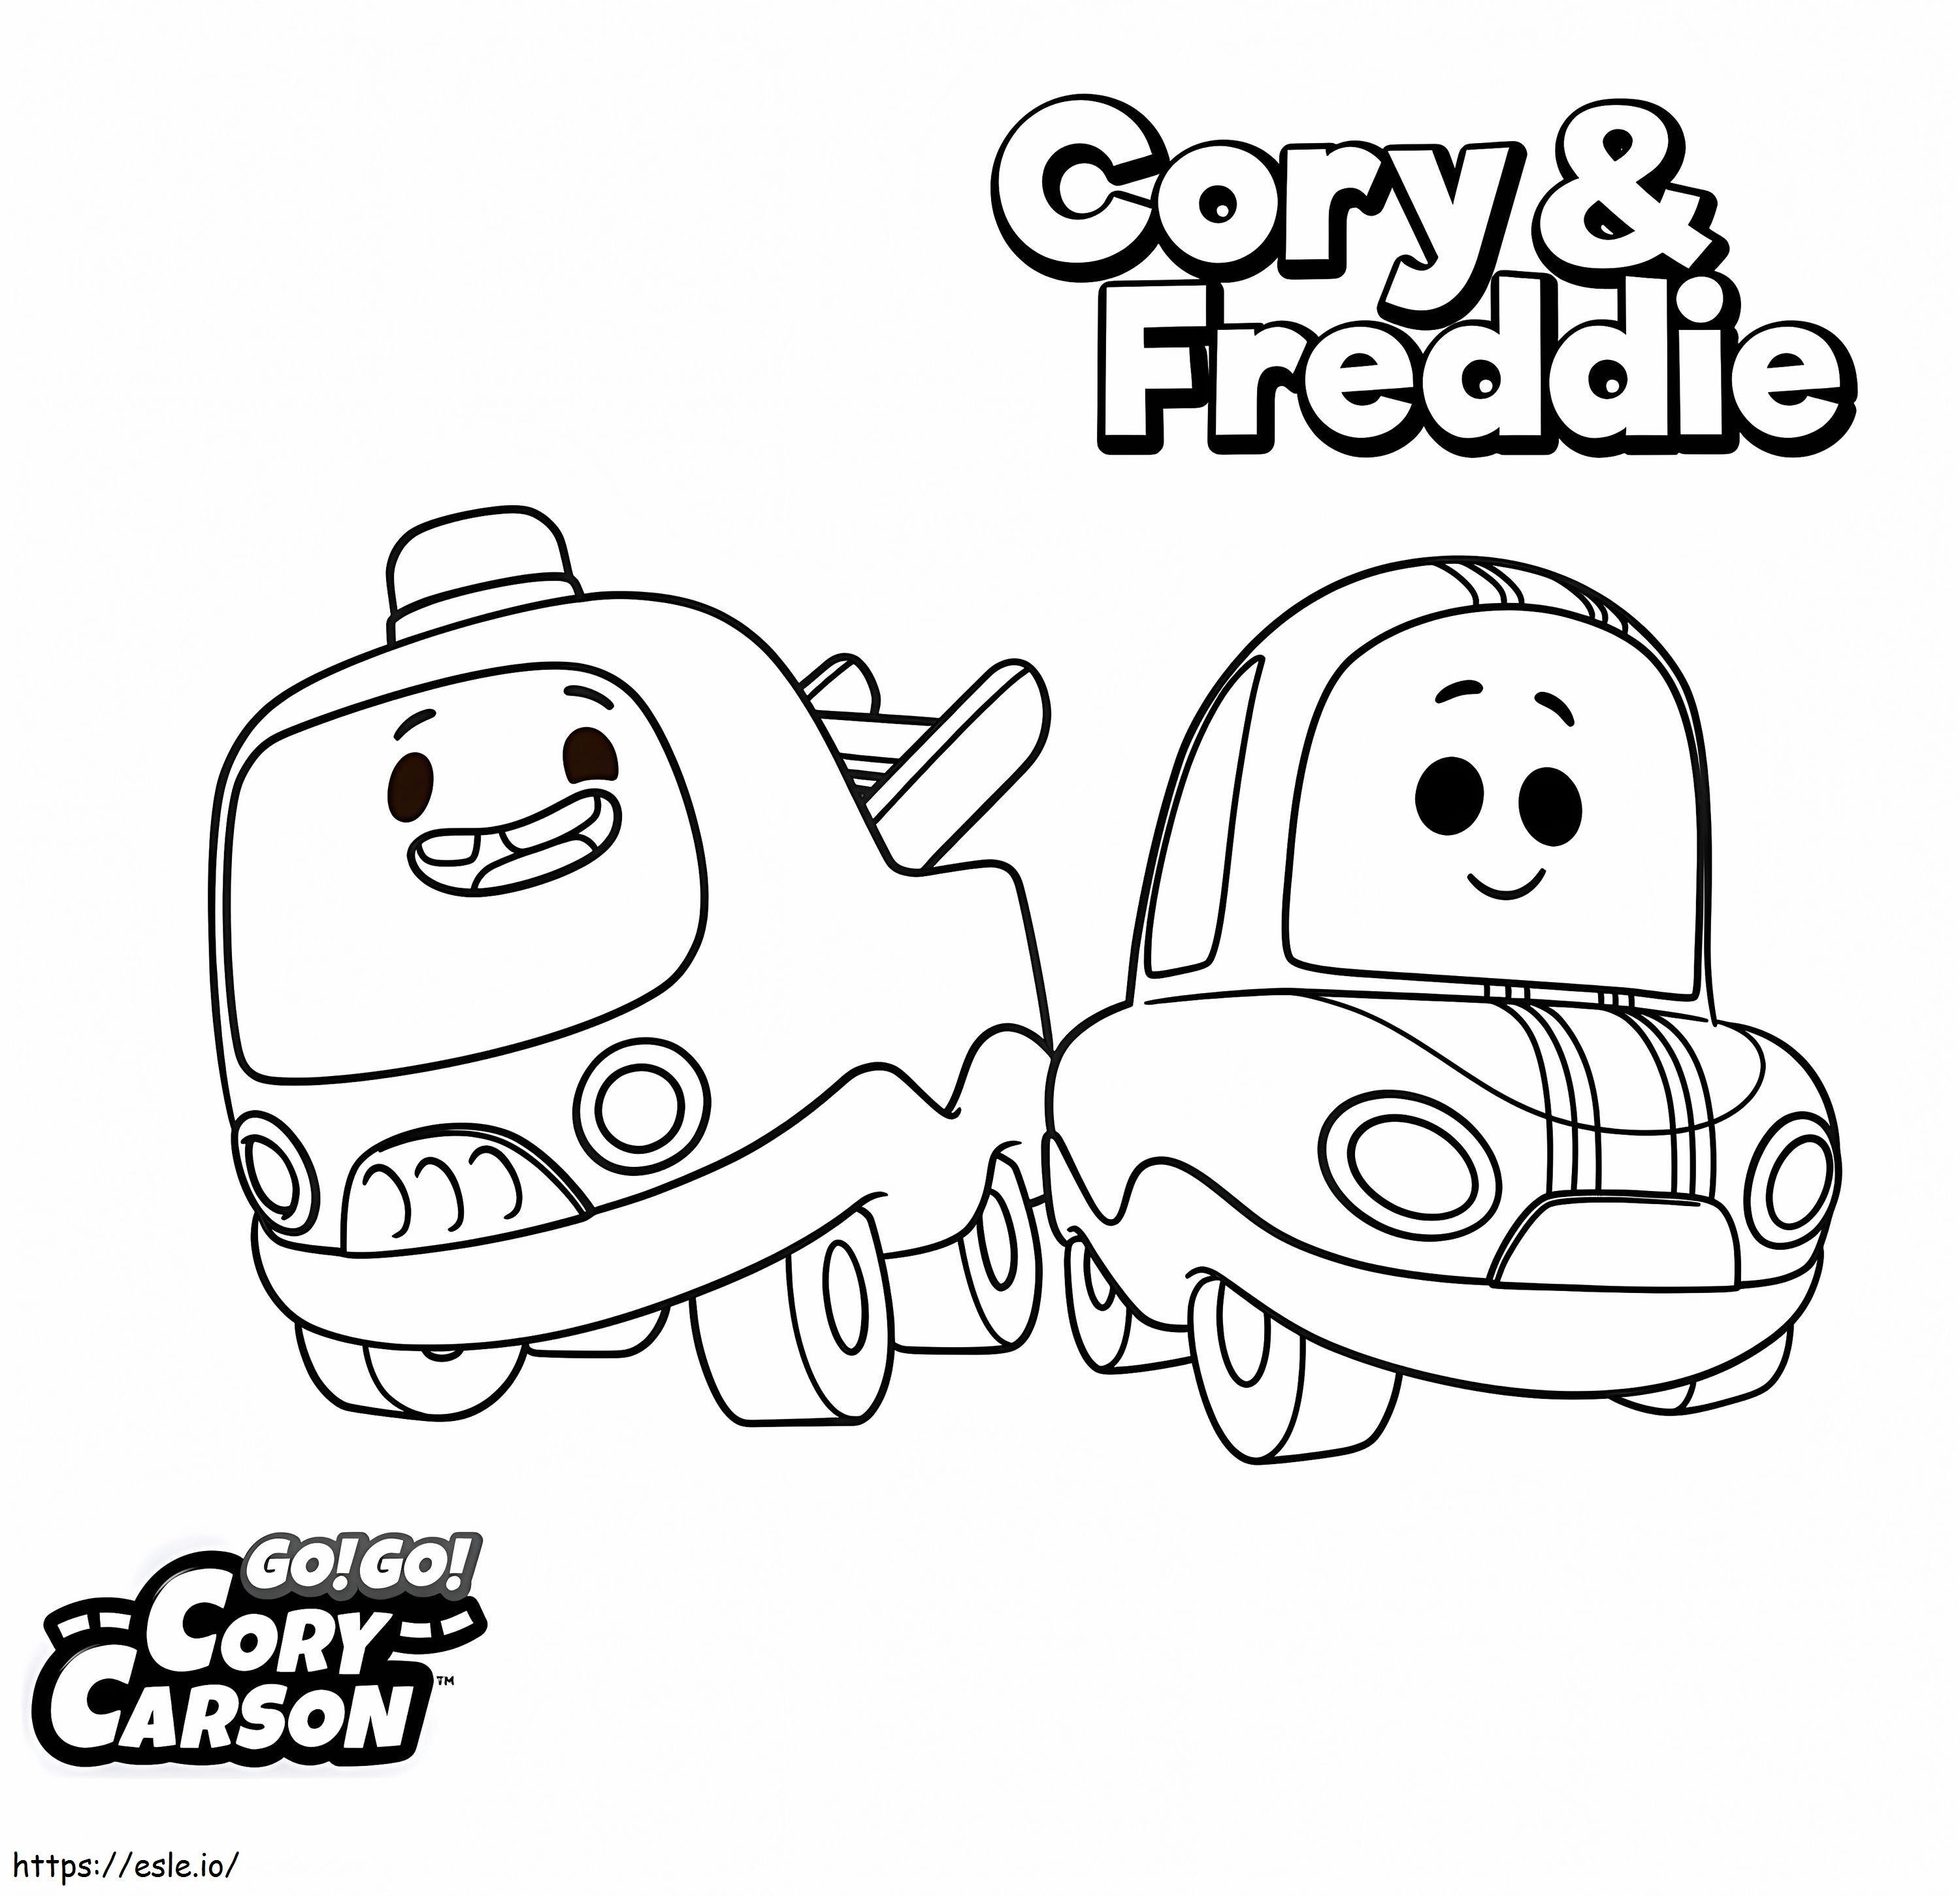 Go Go'dan Cory ve Freddie Cory Carson boyama